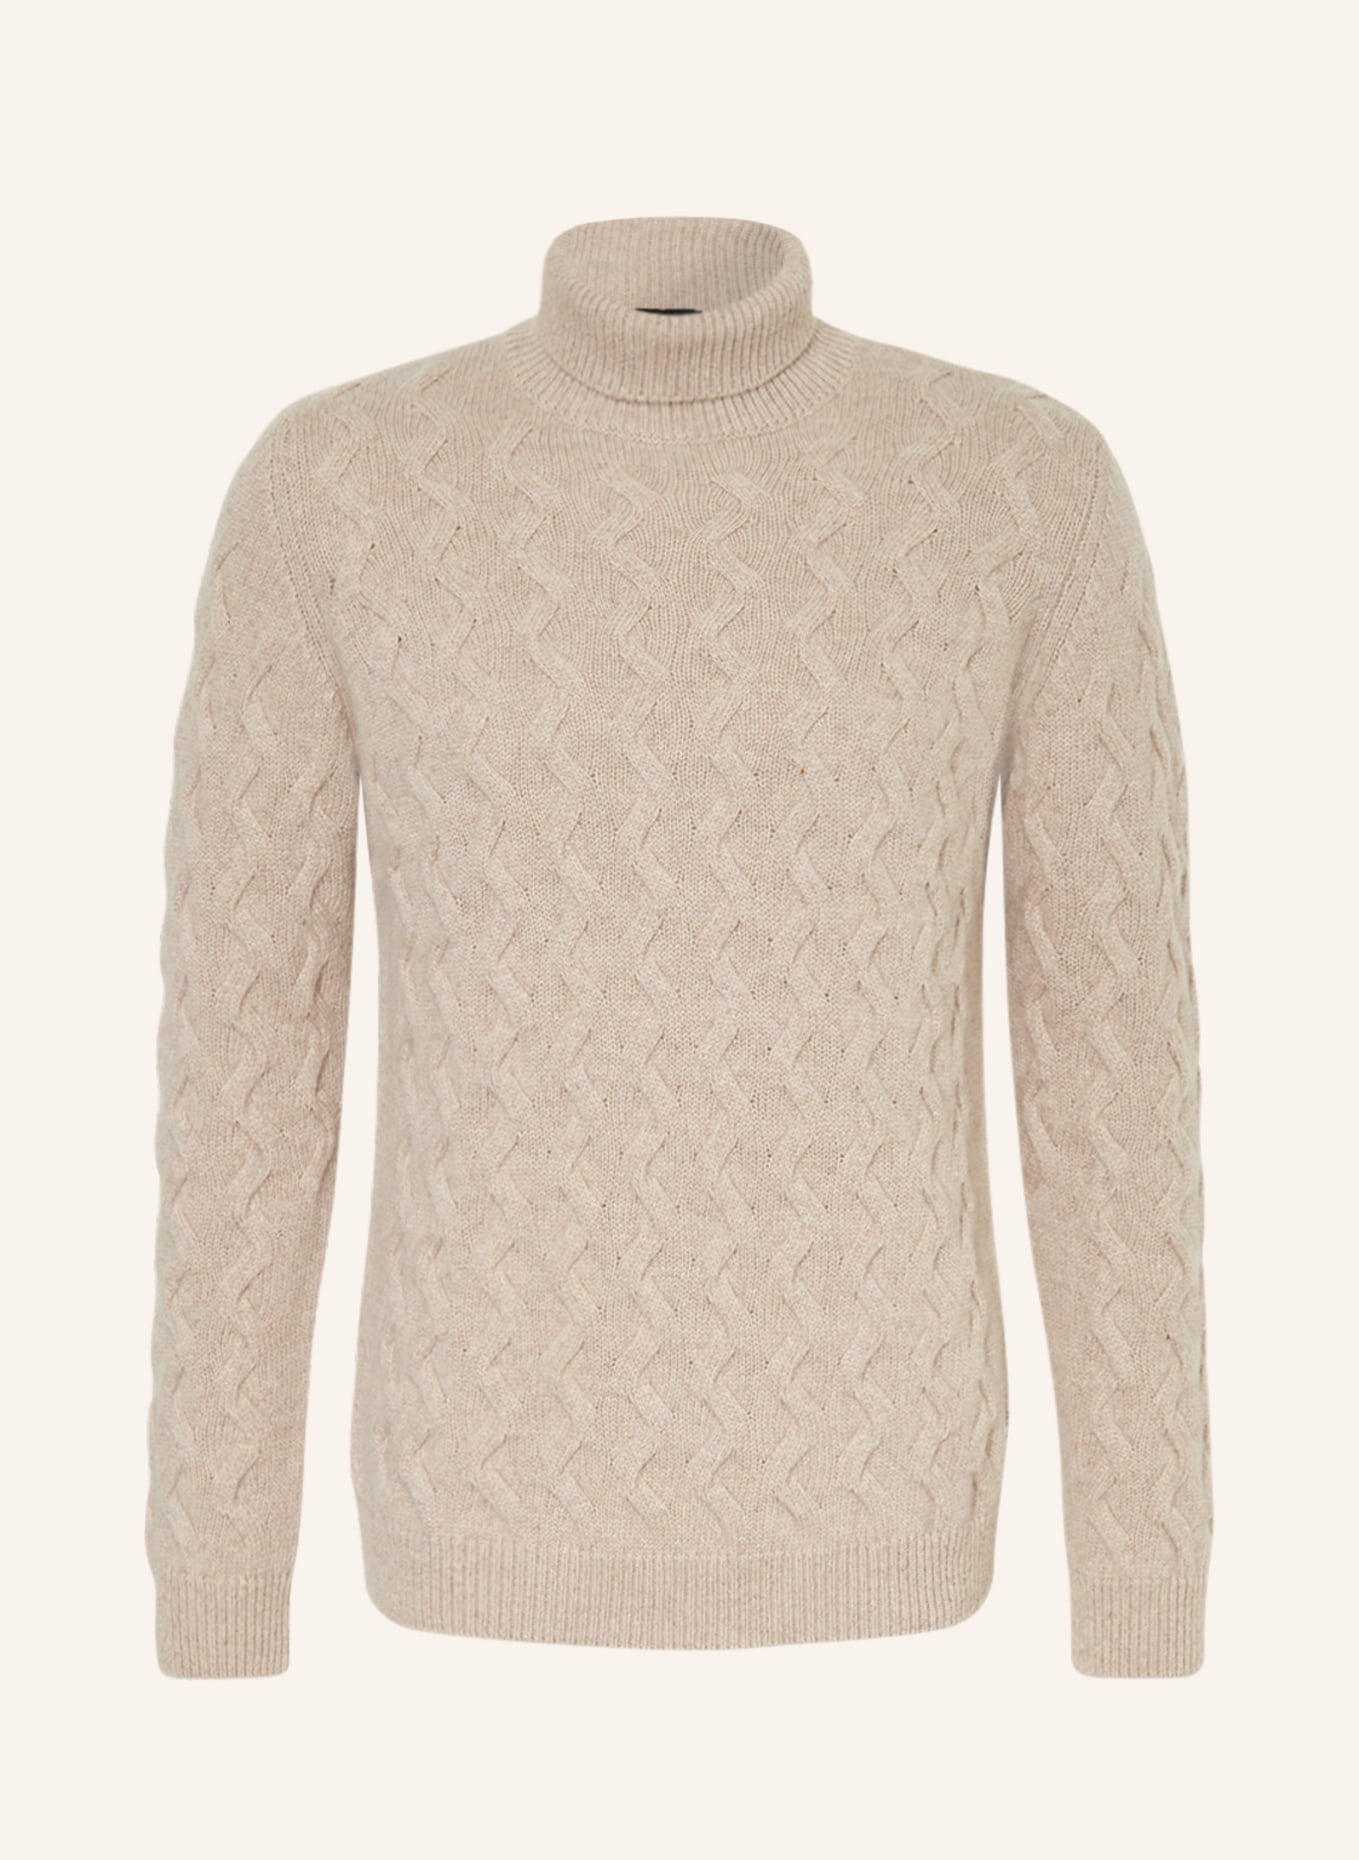 Louis Vuitton Cream Rib Knit Turtle Neck Sweater S